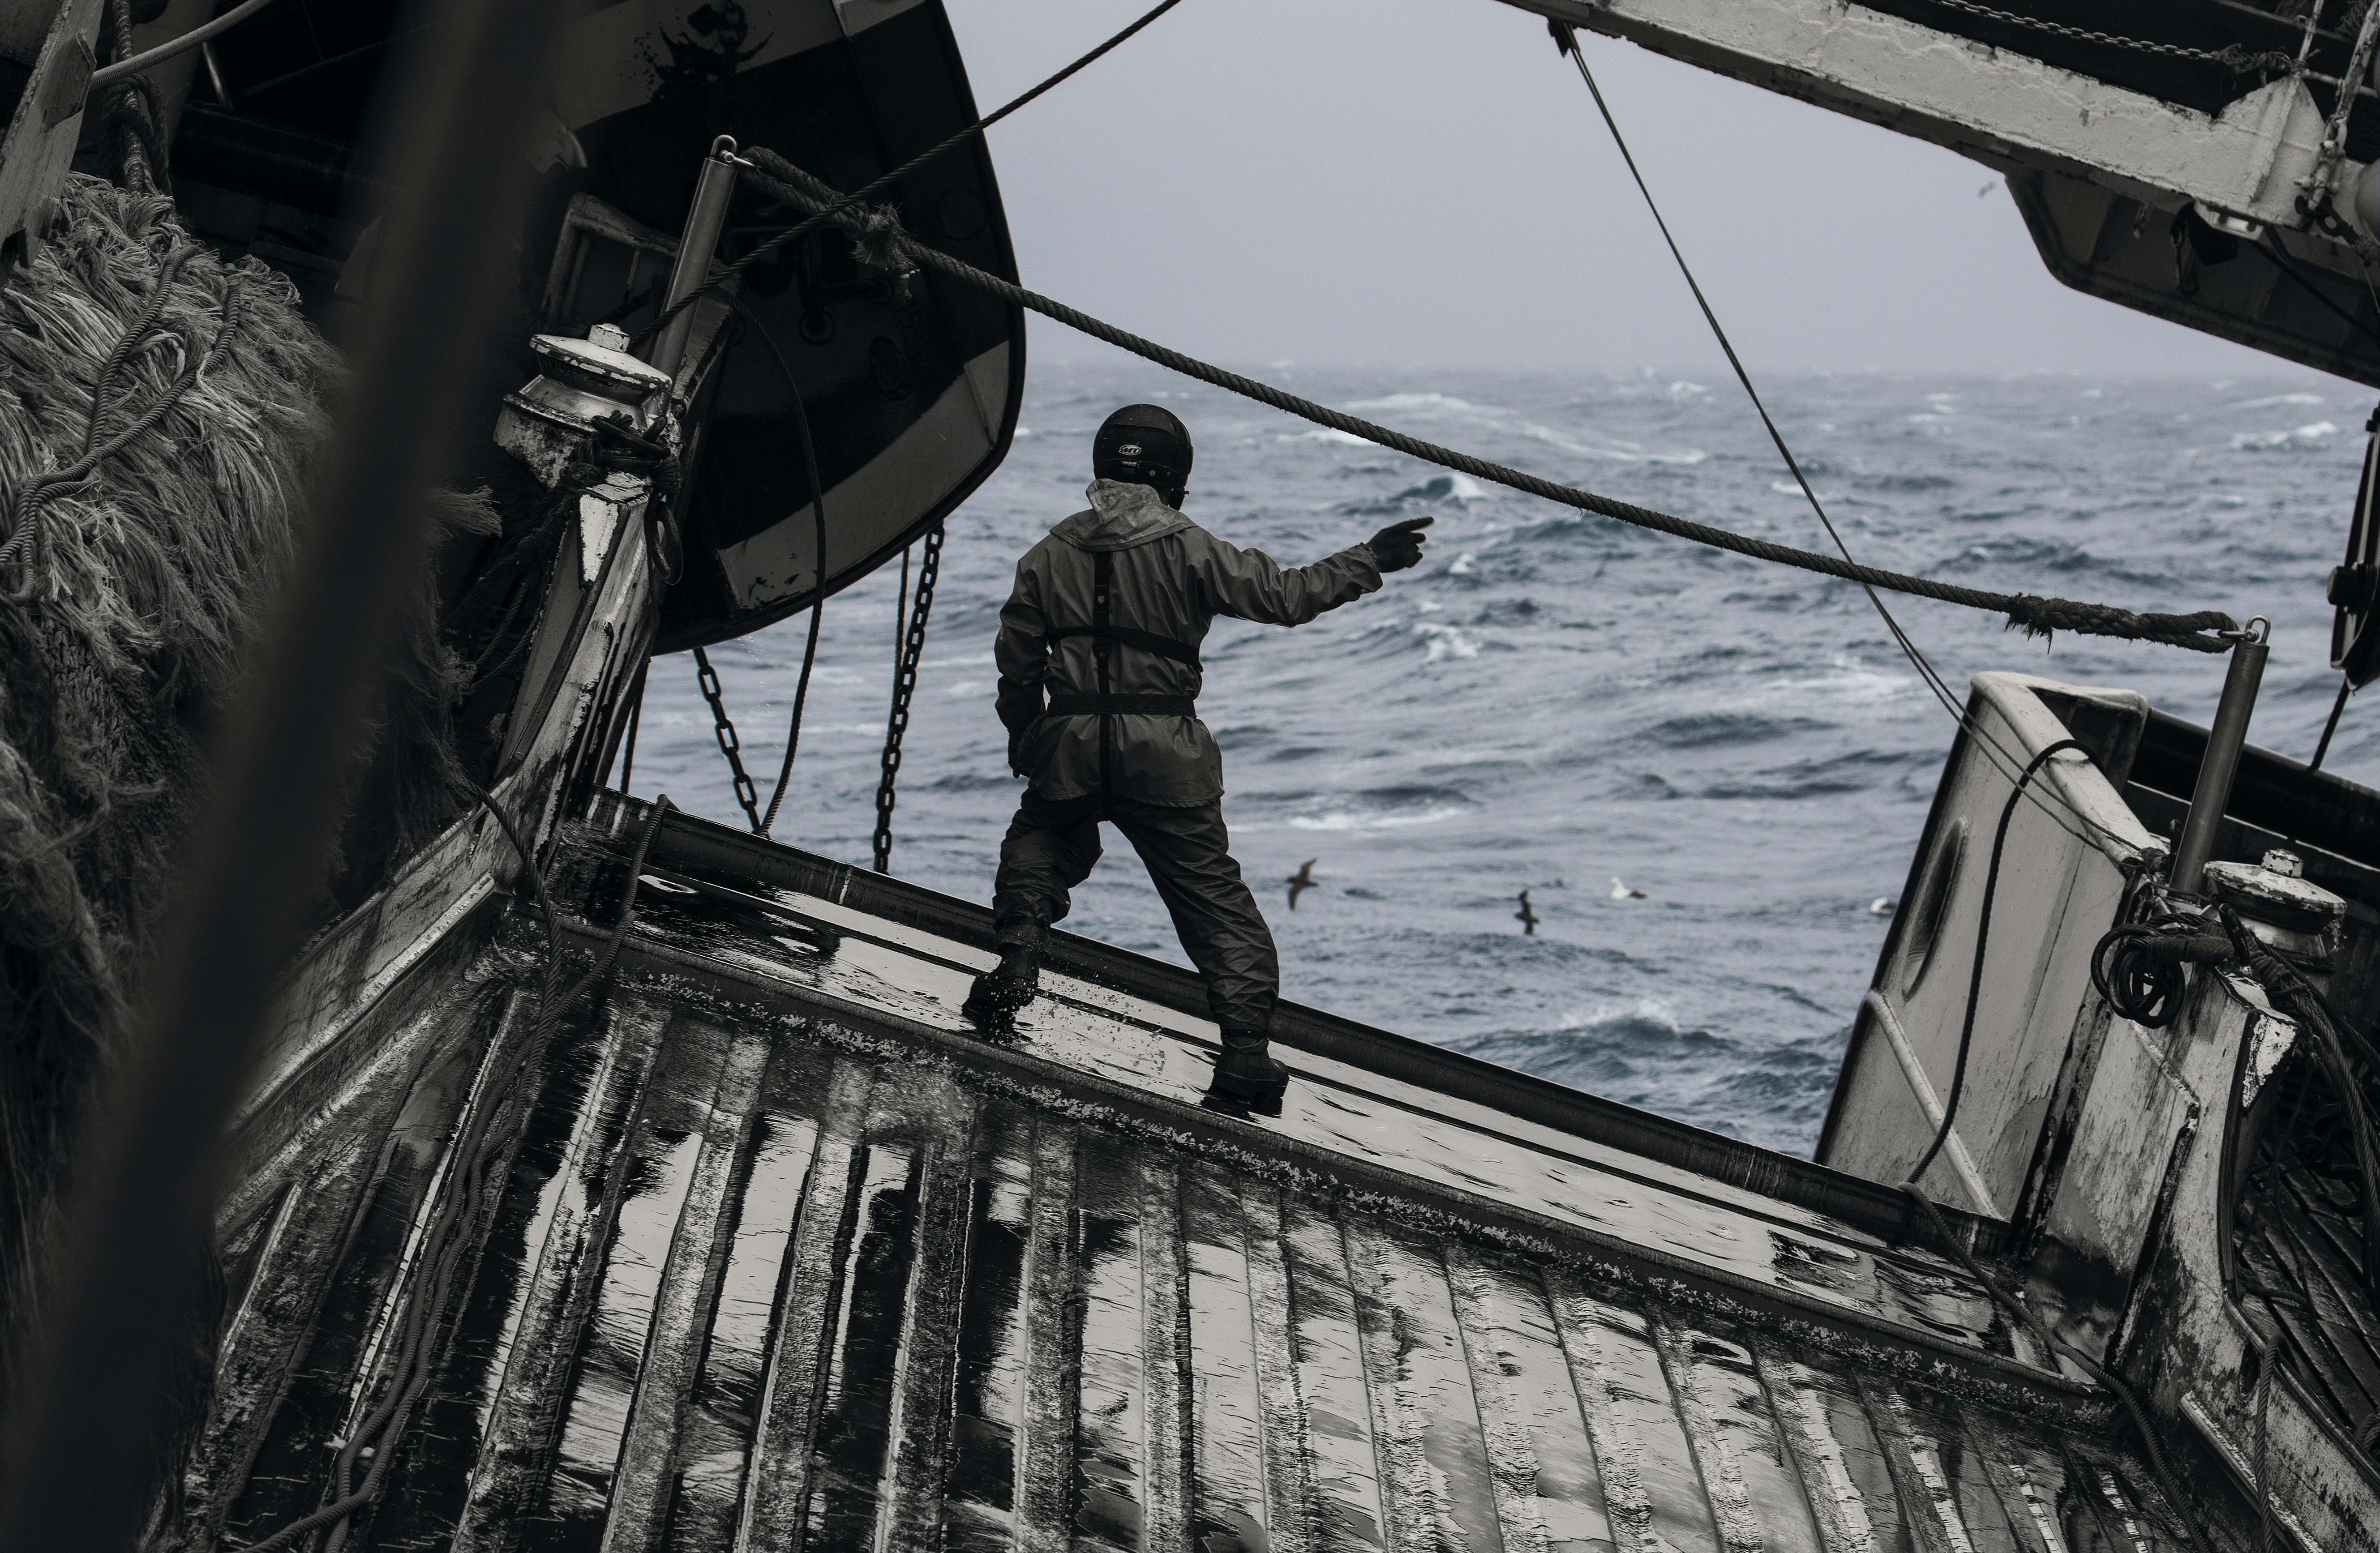 man on fishing boat in rough seas